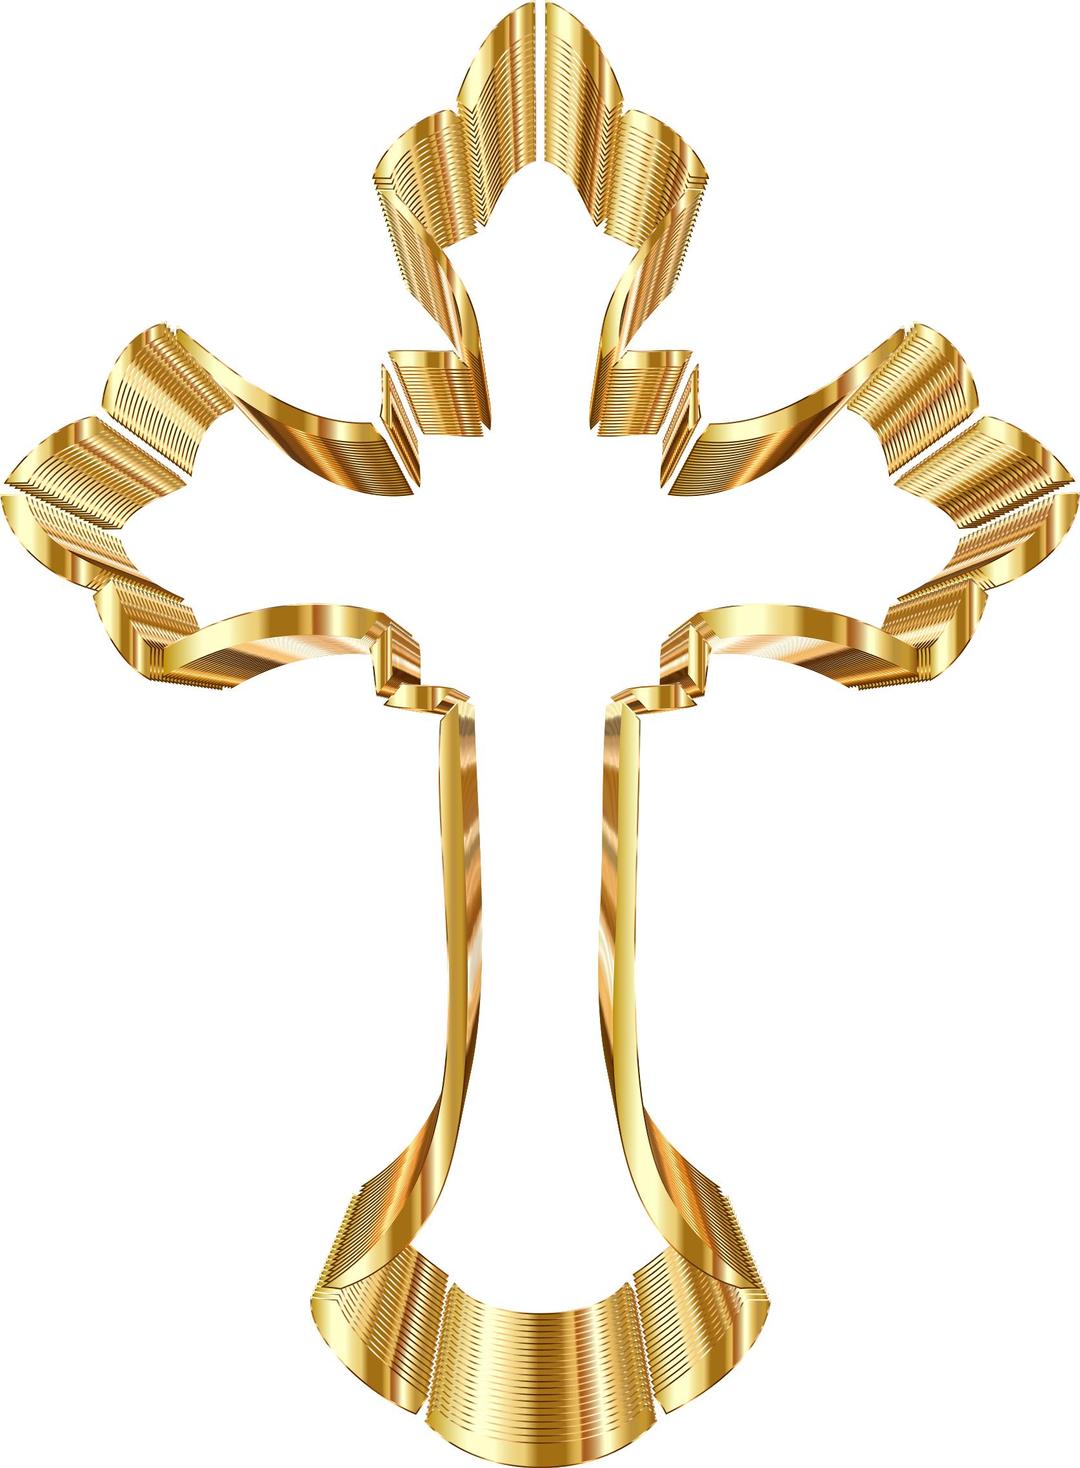 Gold Ornate Cross No Background png transparent